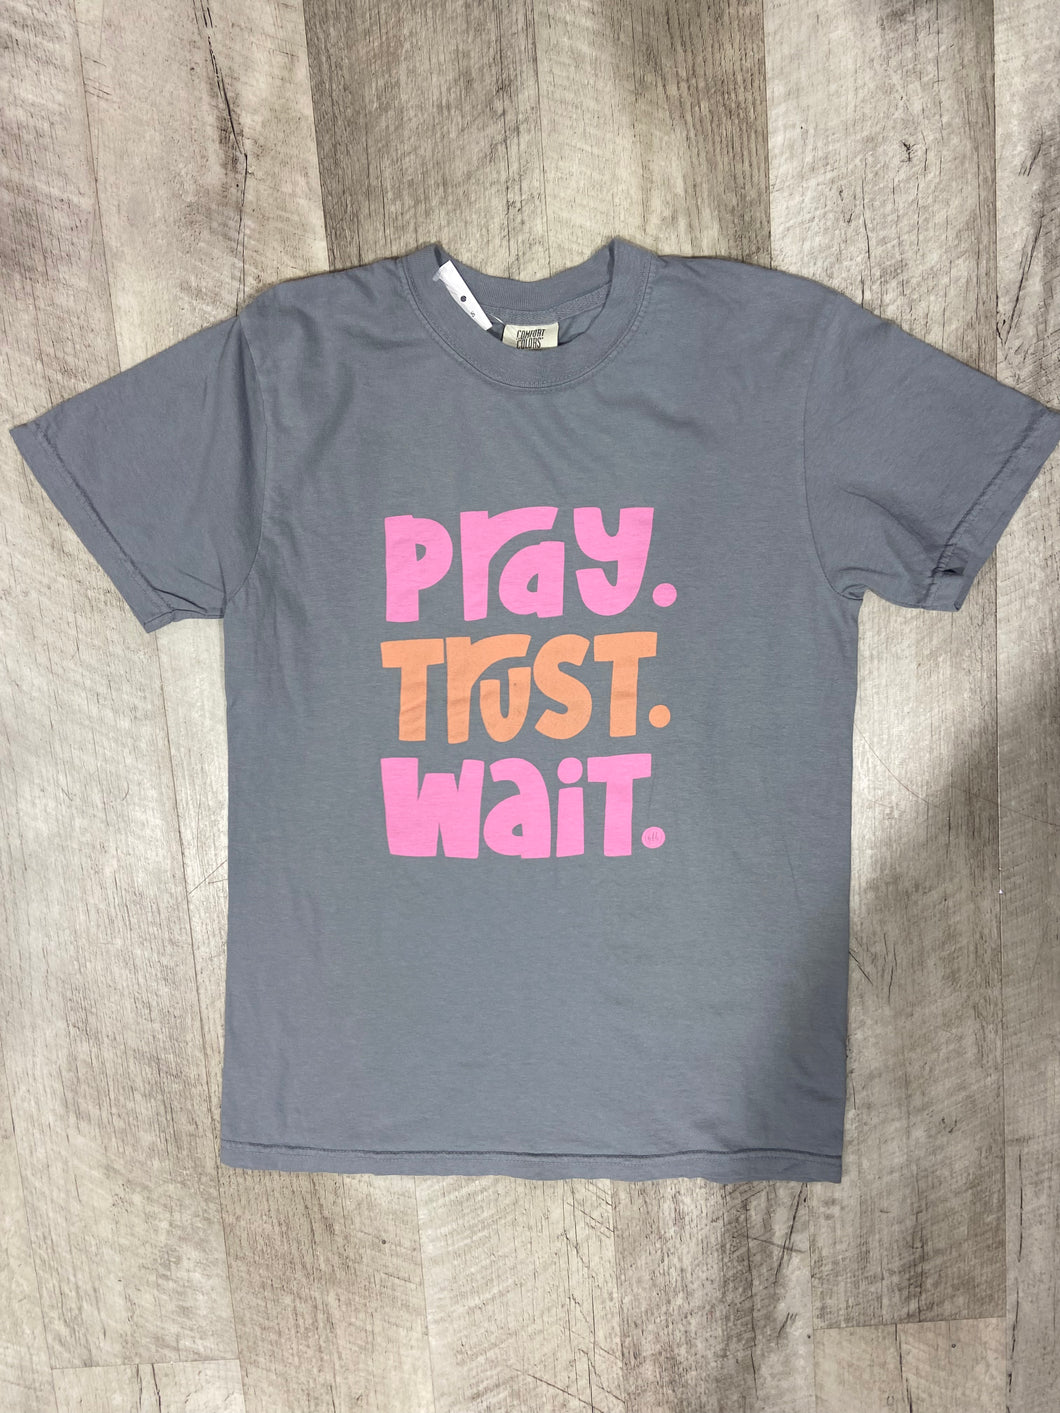 Pray Trust Wait Christian T-Shirt